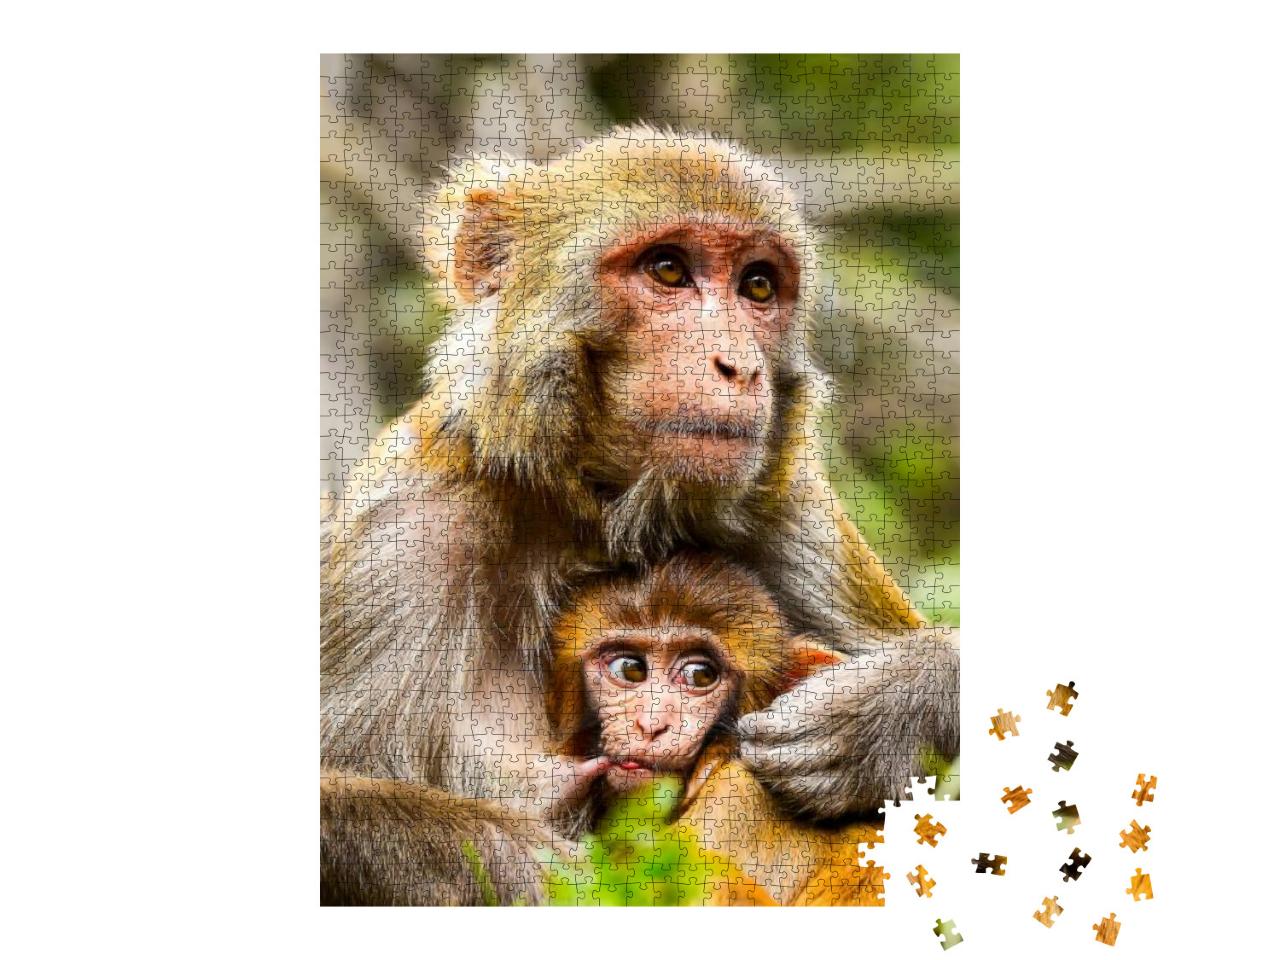 Puzzle 1000 Teile „Affenmutter mit Baby, Portrait“